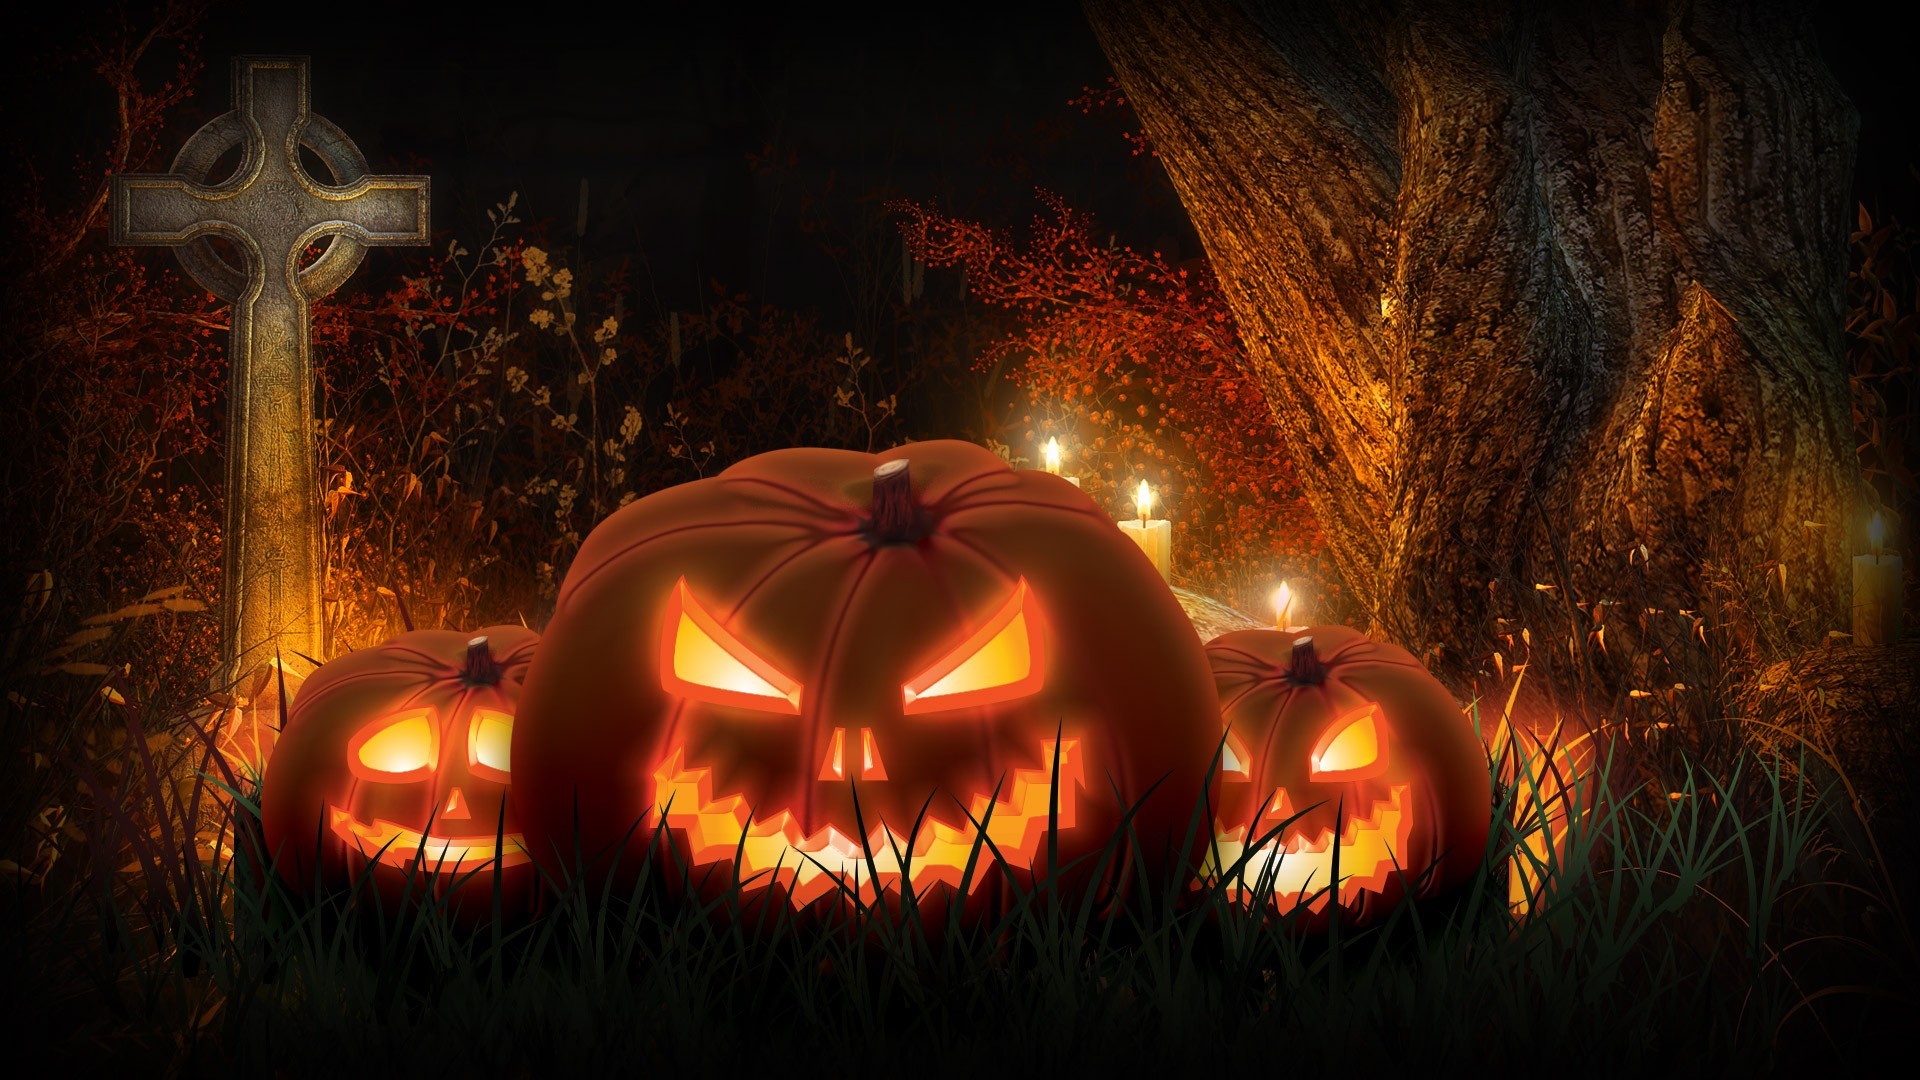 Halloween Scary Jacck Skellington Spooky Cemetery Pumpkins Cool